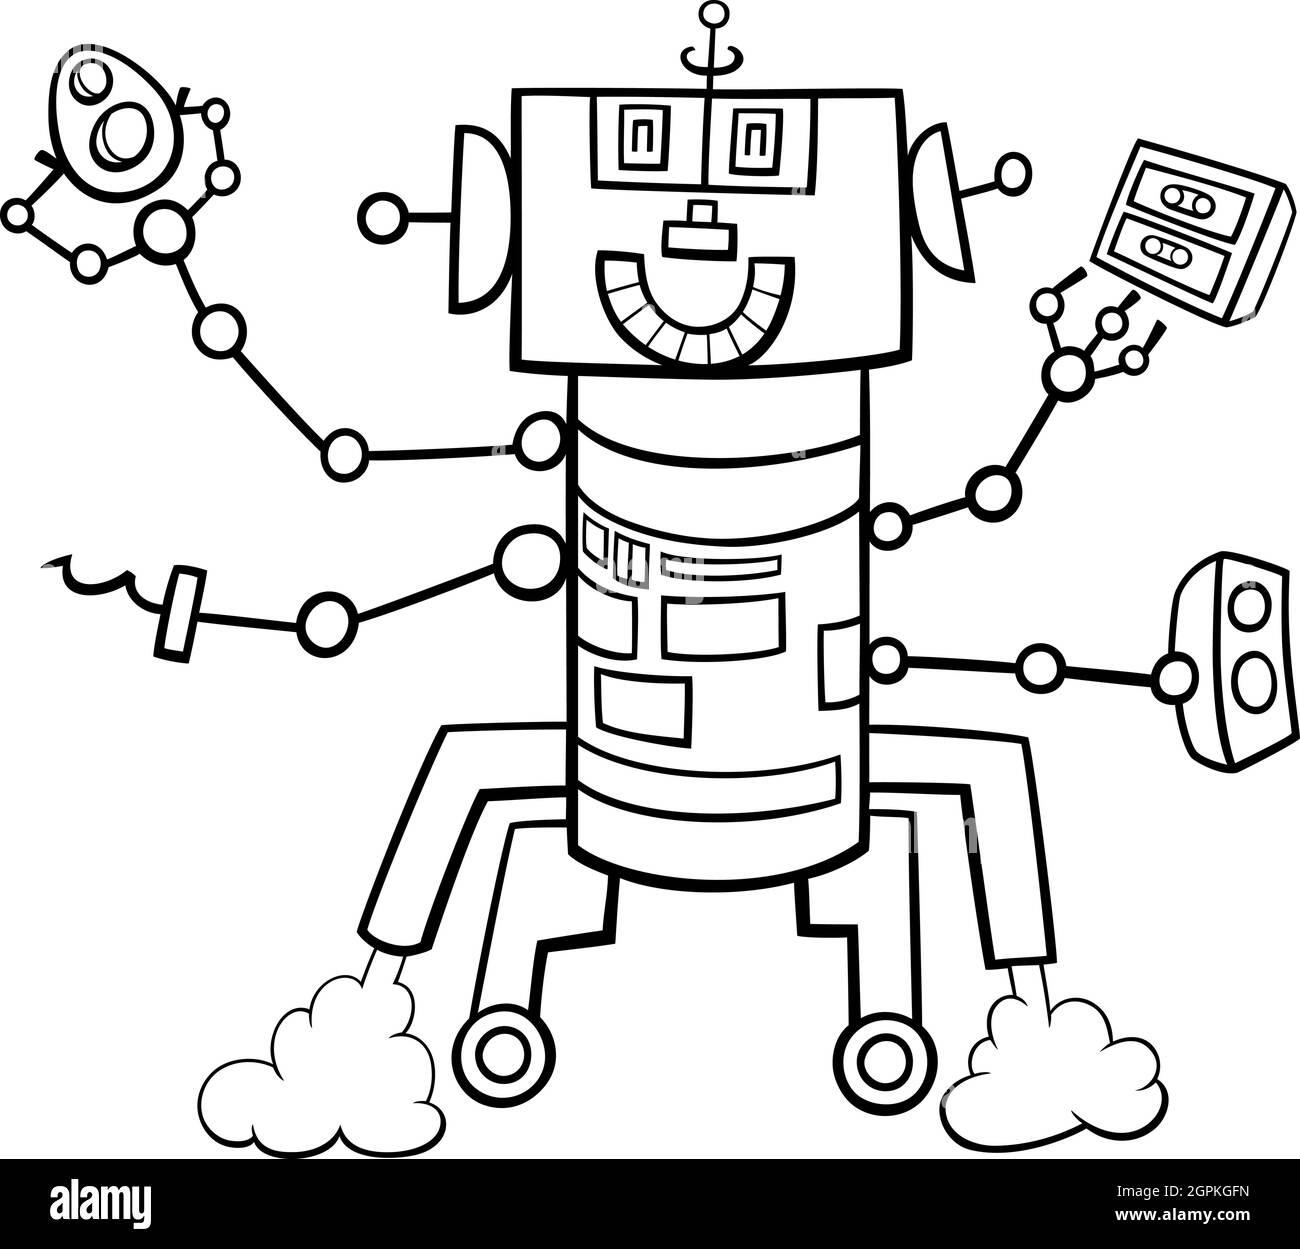 cartoon robot fantasy character coloring book page Stock Vector